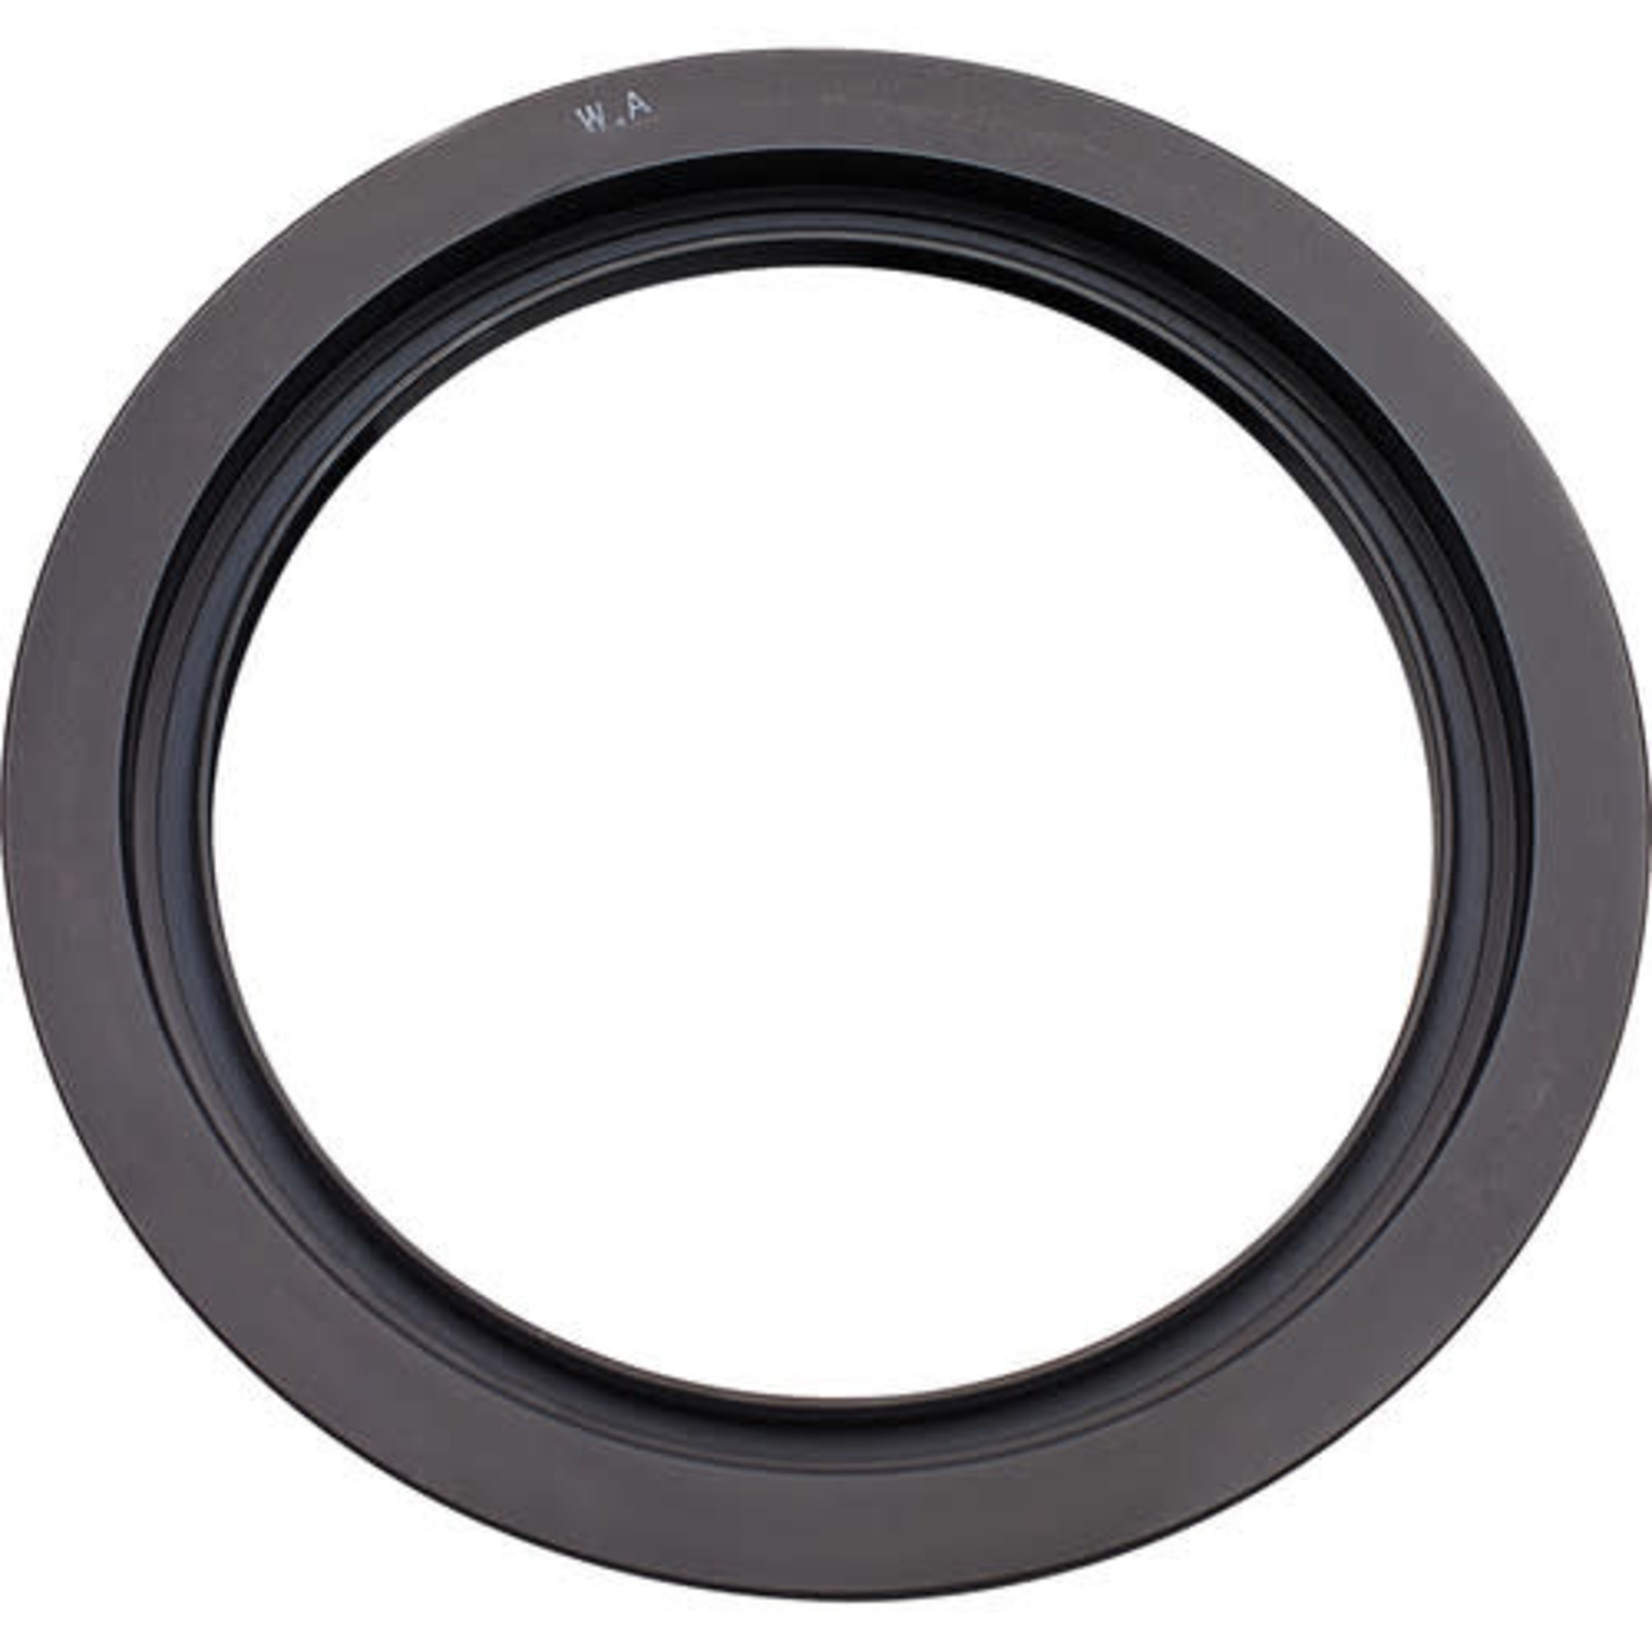 Lee LEE Filters 77mm Wide-Angle Lens Adapter Ring for 100mm System Filter Holder